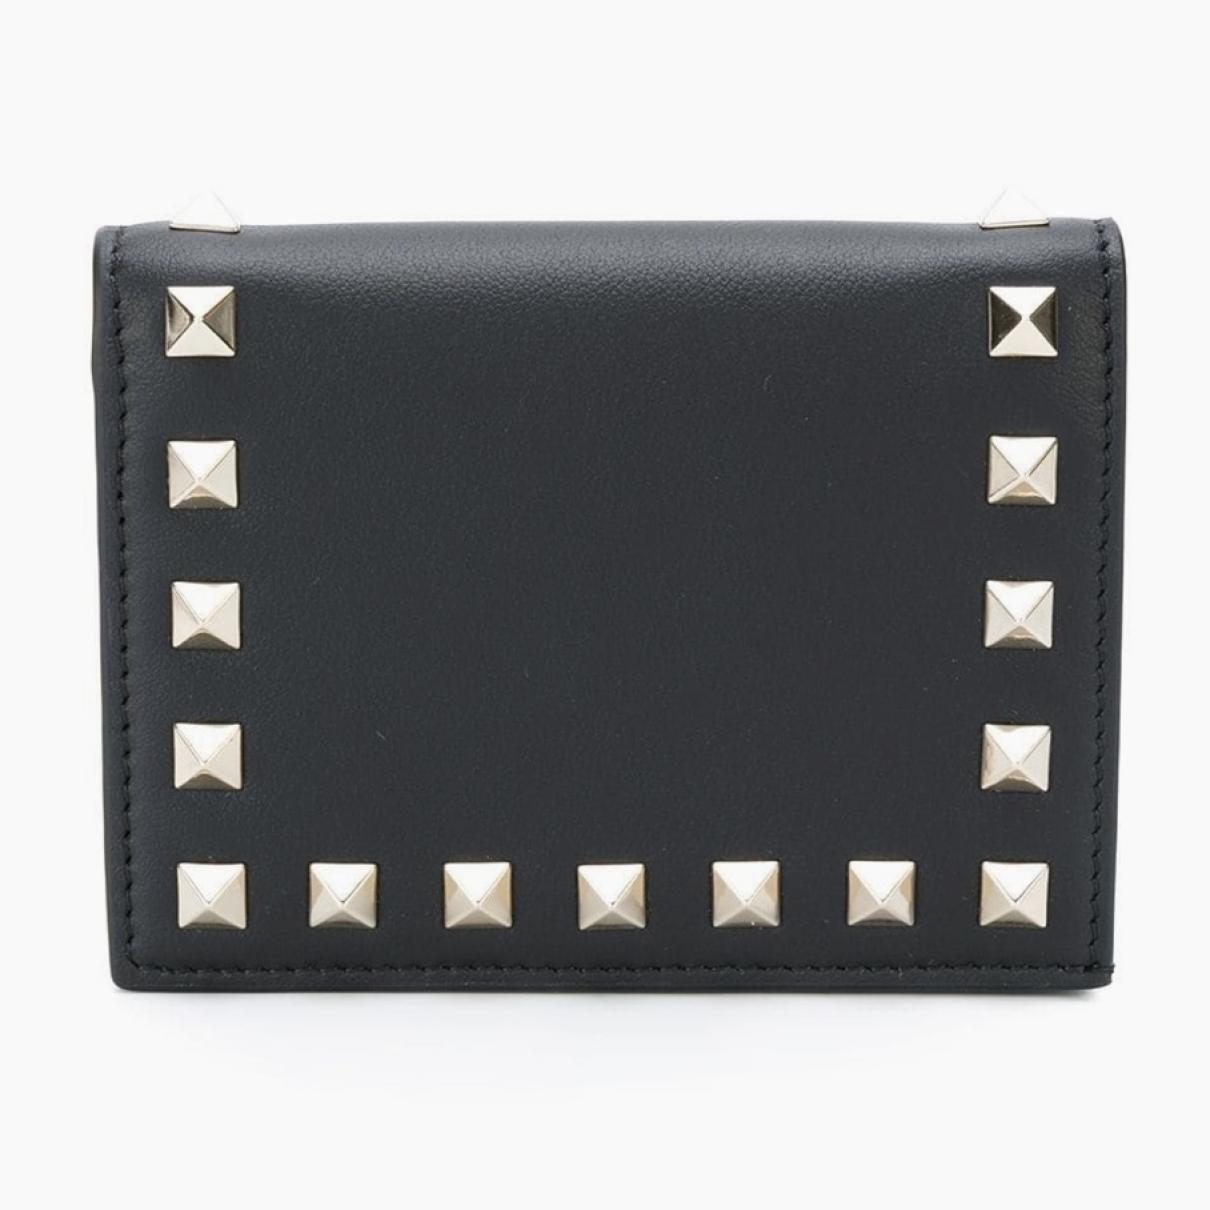 Rockstud leather card wallet - 2